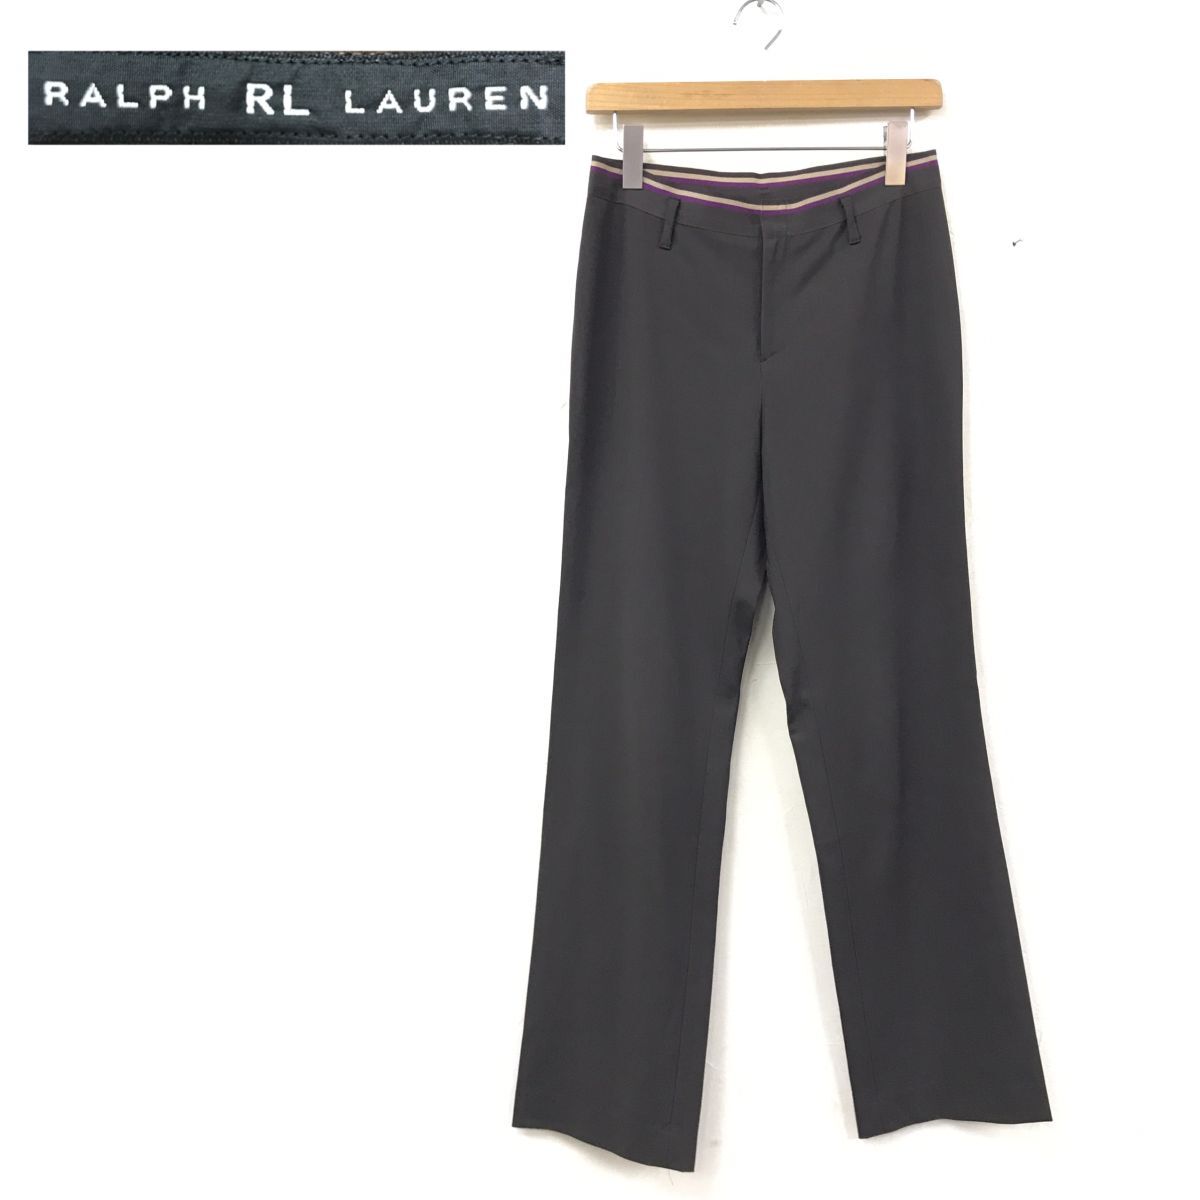 A2346-R*RL RALPH LAURENa-ru L Ralph Lauren slacks * size 9 lady's woman bottoms wool . Brown flair Silhouette 